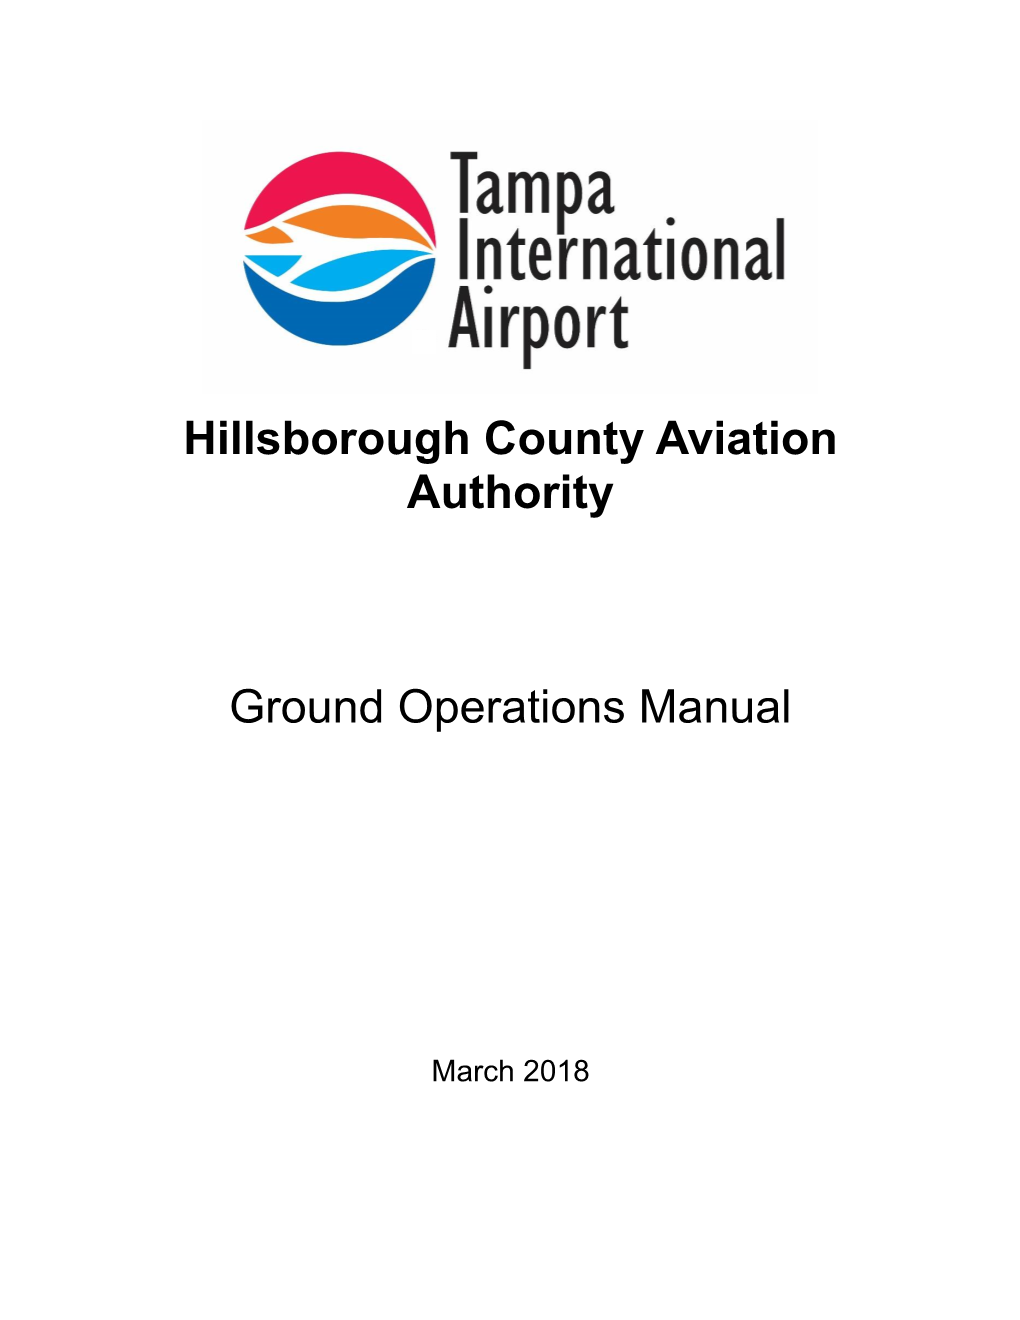 Hillsborough County Aviation Authority Ground Operations Manual